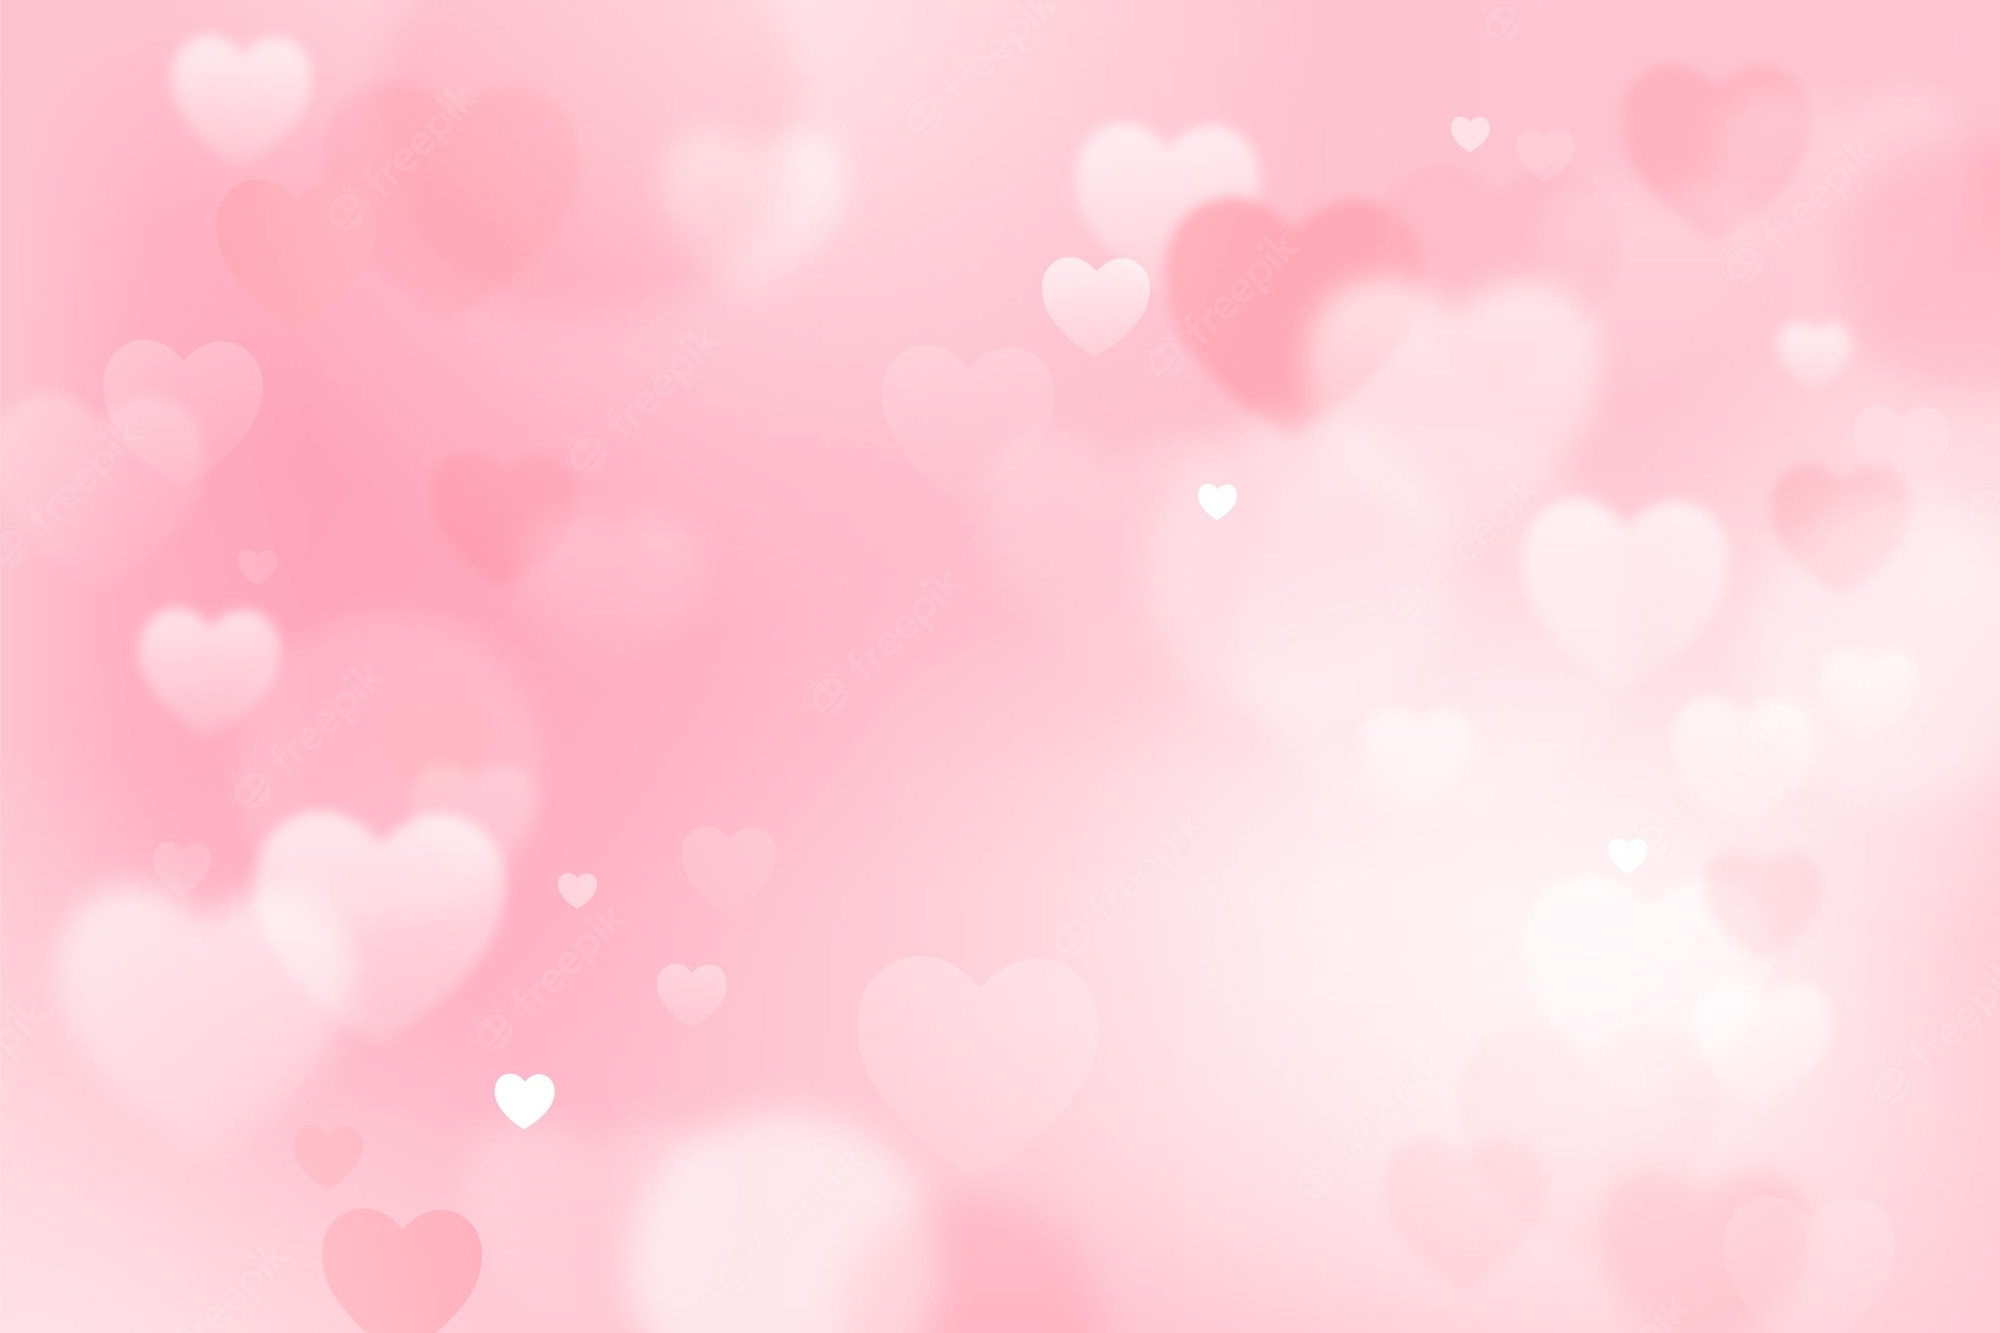 Free Vector. Blurred valentine's day wallpaper